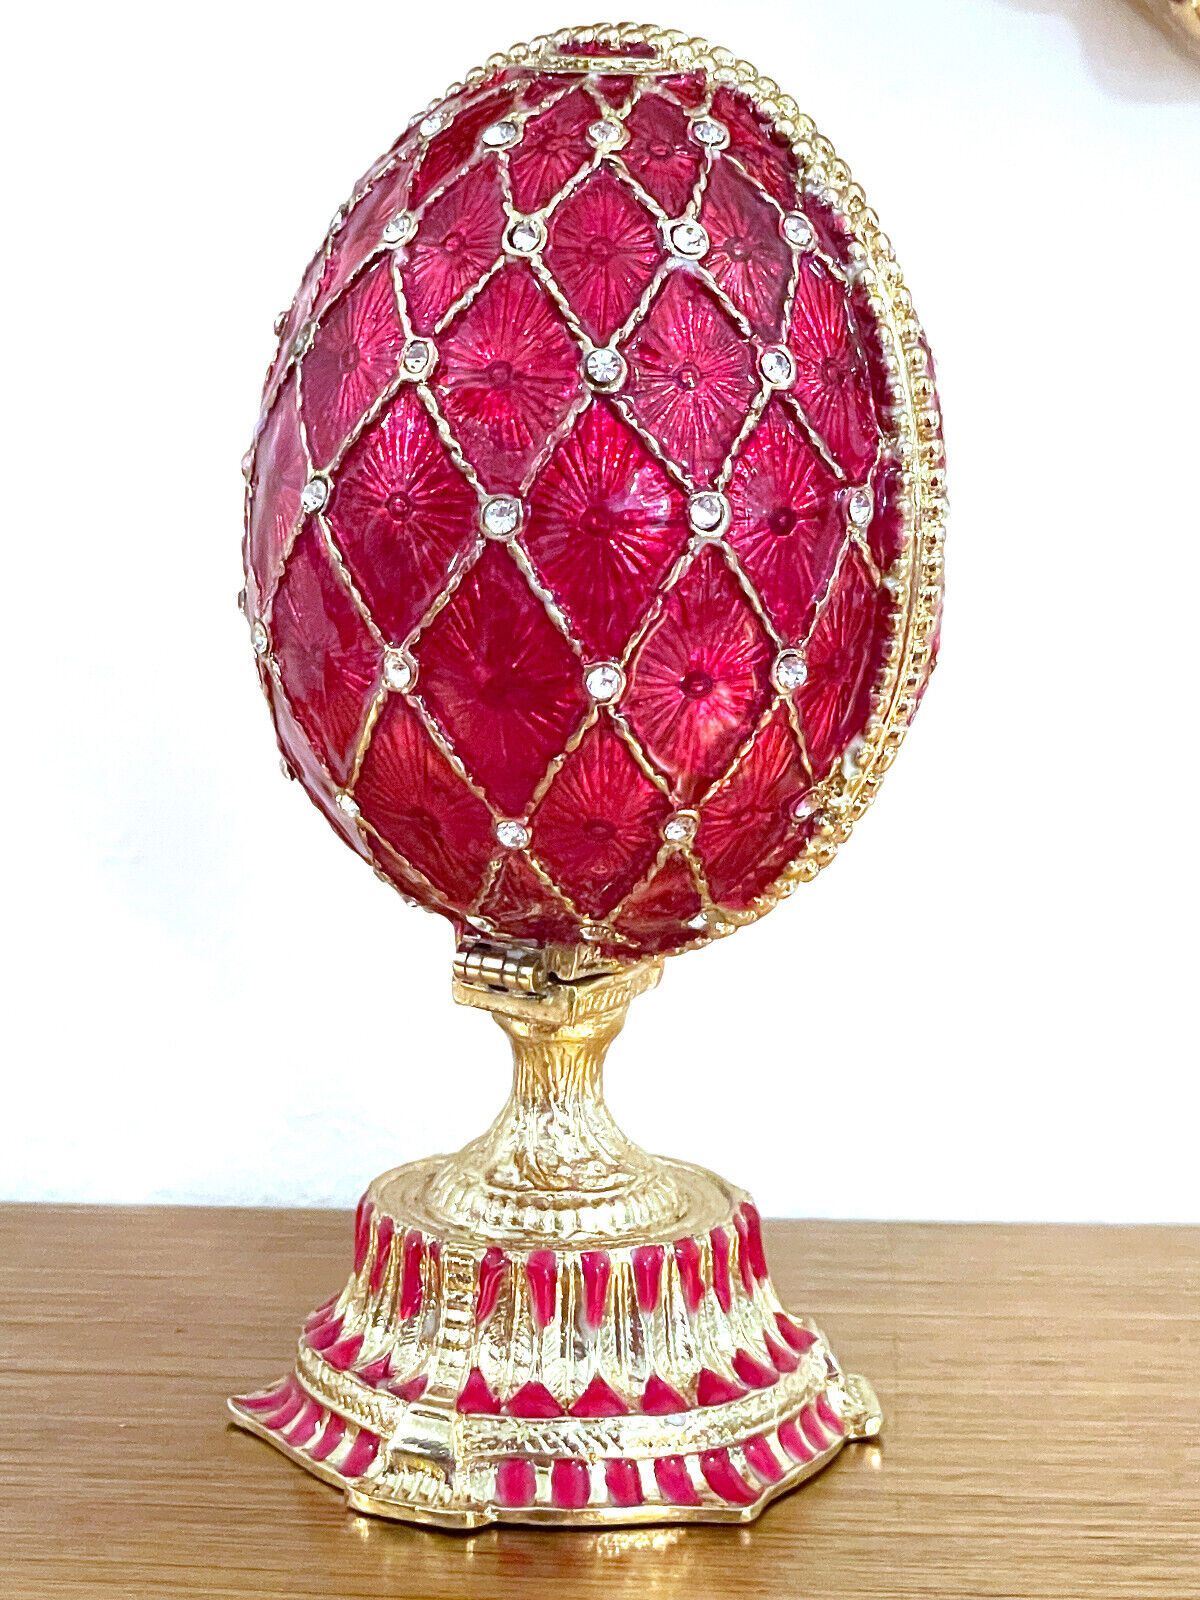 Imperial Crown Faberge for Christmas & Gold Bracelet gift Fabergé egg Swarovski